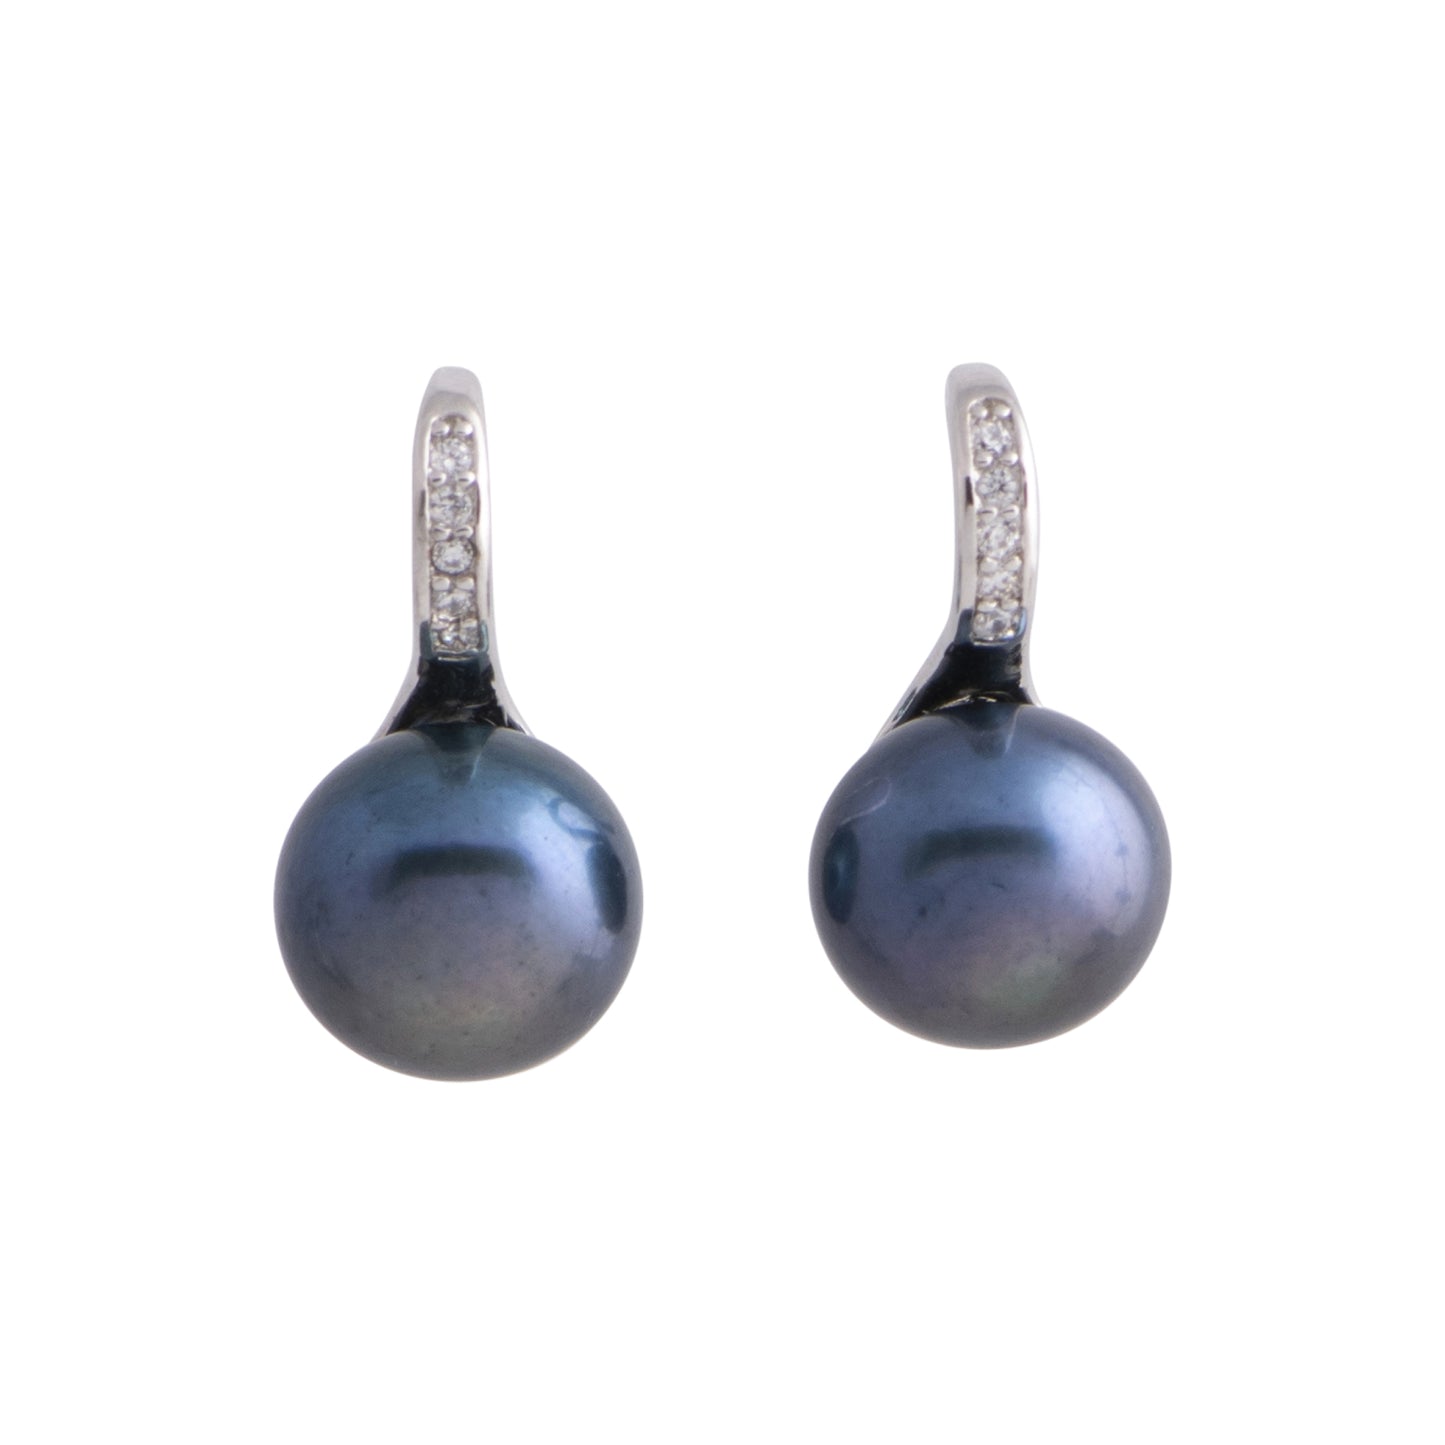 Europa - Silver-tone huggie earring with freshwater pearl (Dark grey pearls)